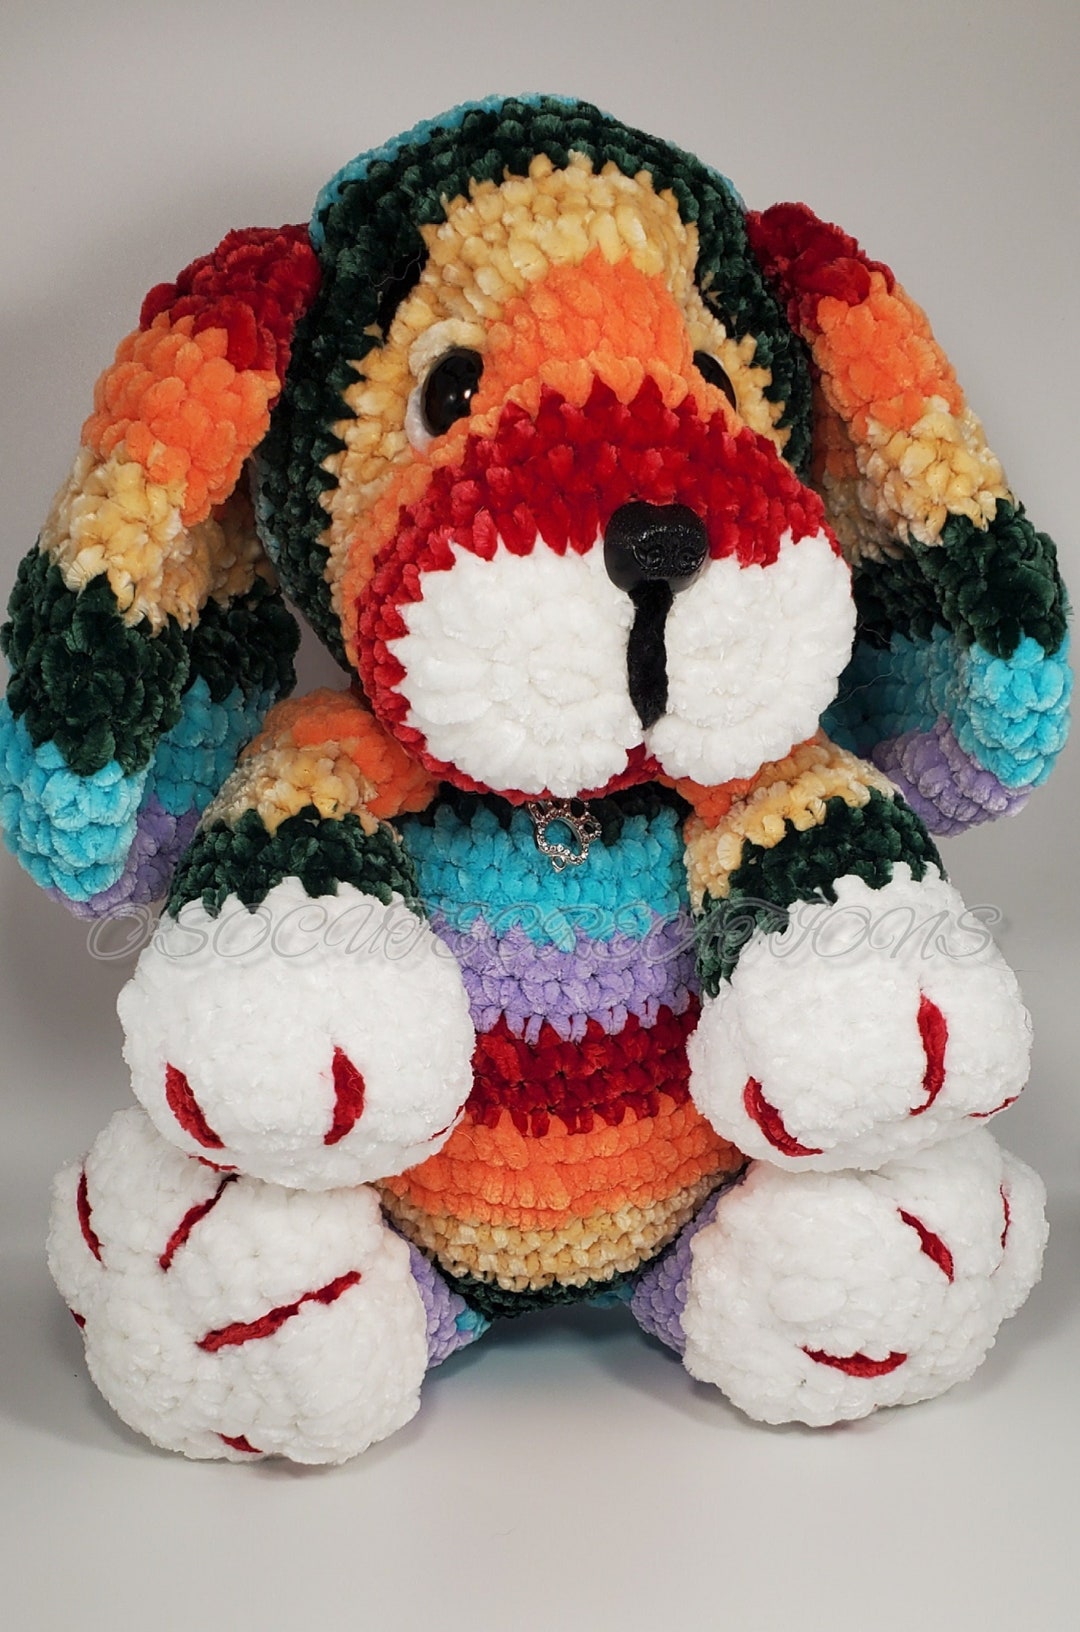 Mystery Crochet Hook, Susan Bates Ergonomic Crochet Hooks, Crochet Hooks,  Loops and Threads, Crochet Surprise, 